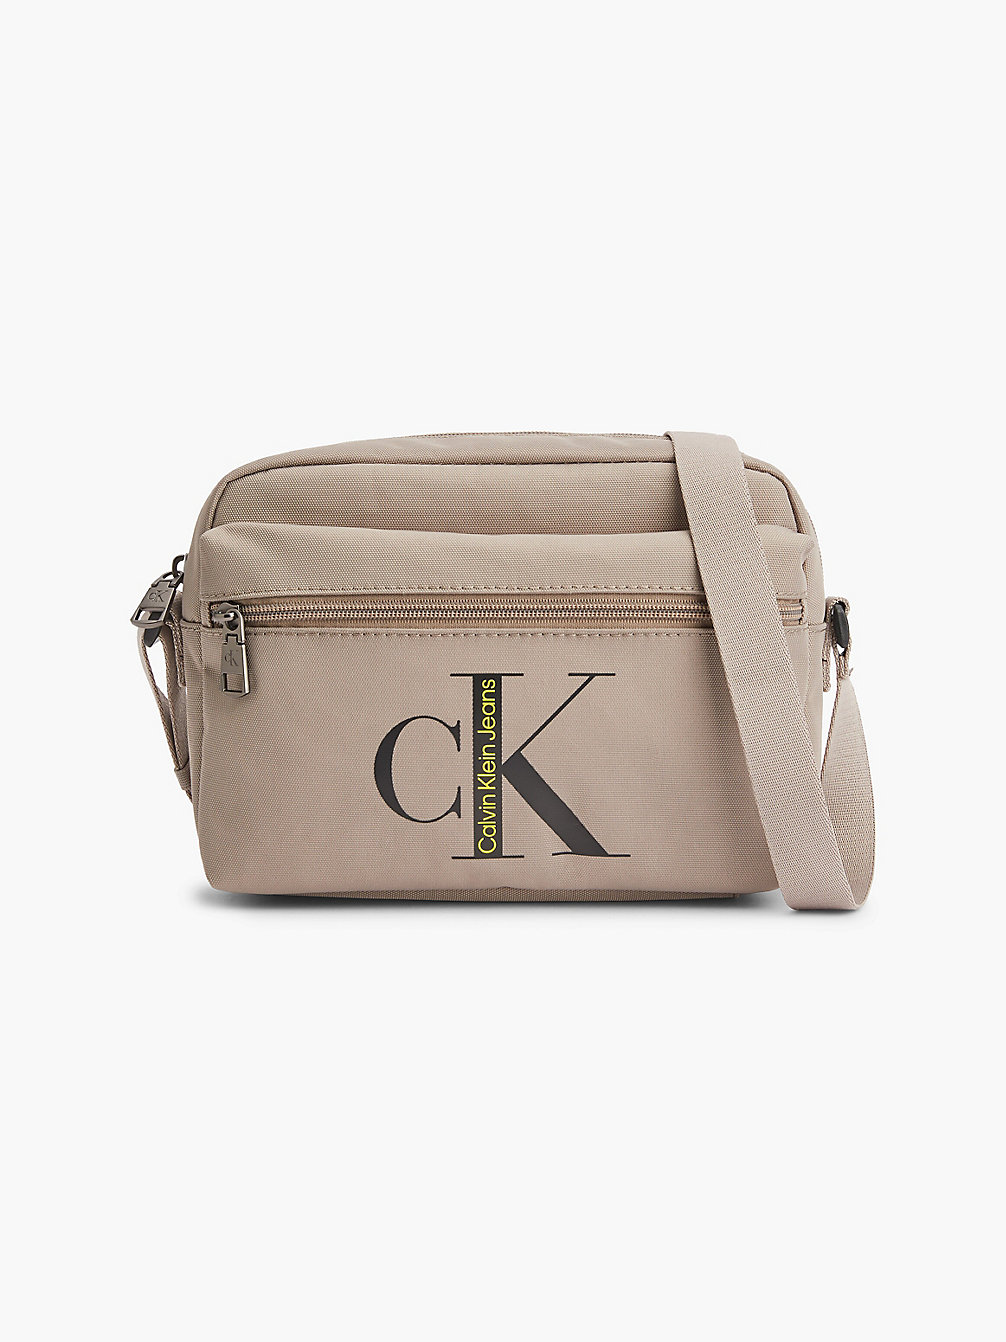 PERFECT TAUPE Crossbody Bag Aus Recyceltem Material undefined Herren Calvin Klein